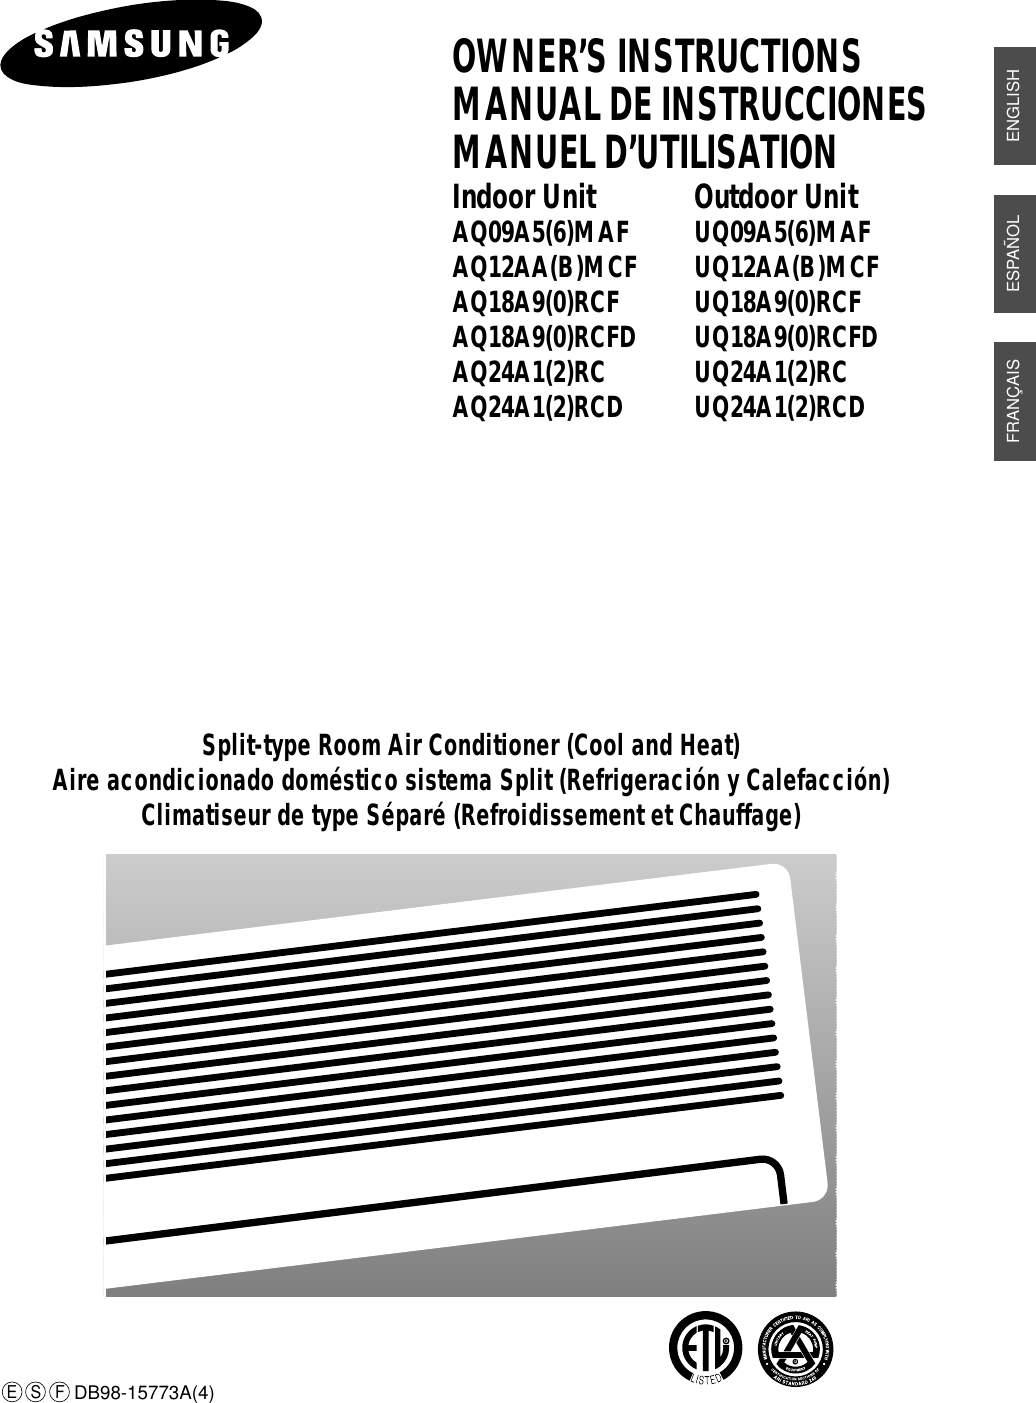 Samsung split air conditioner manual